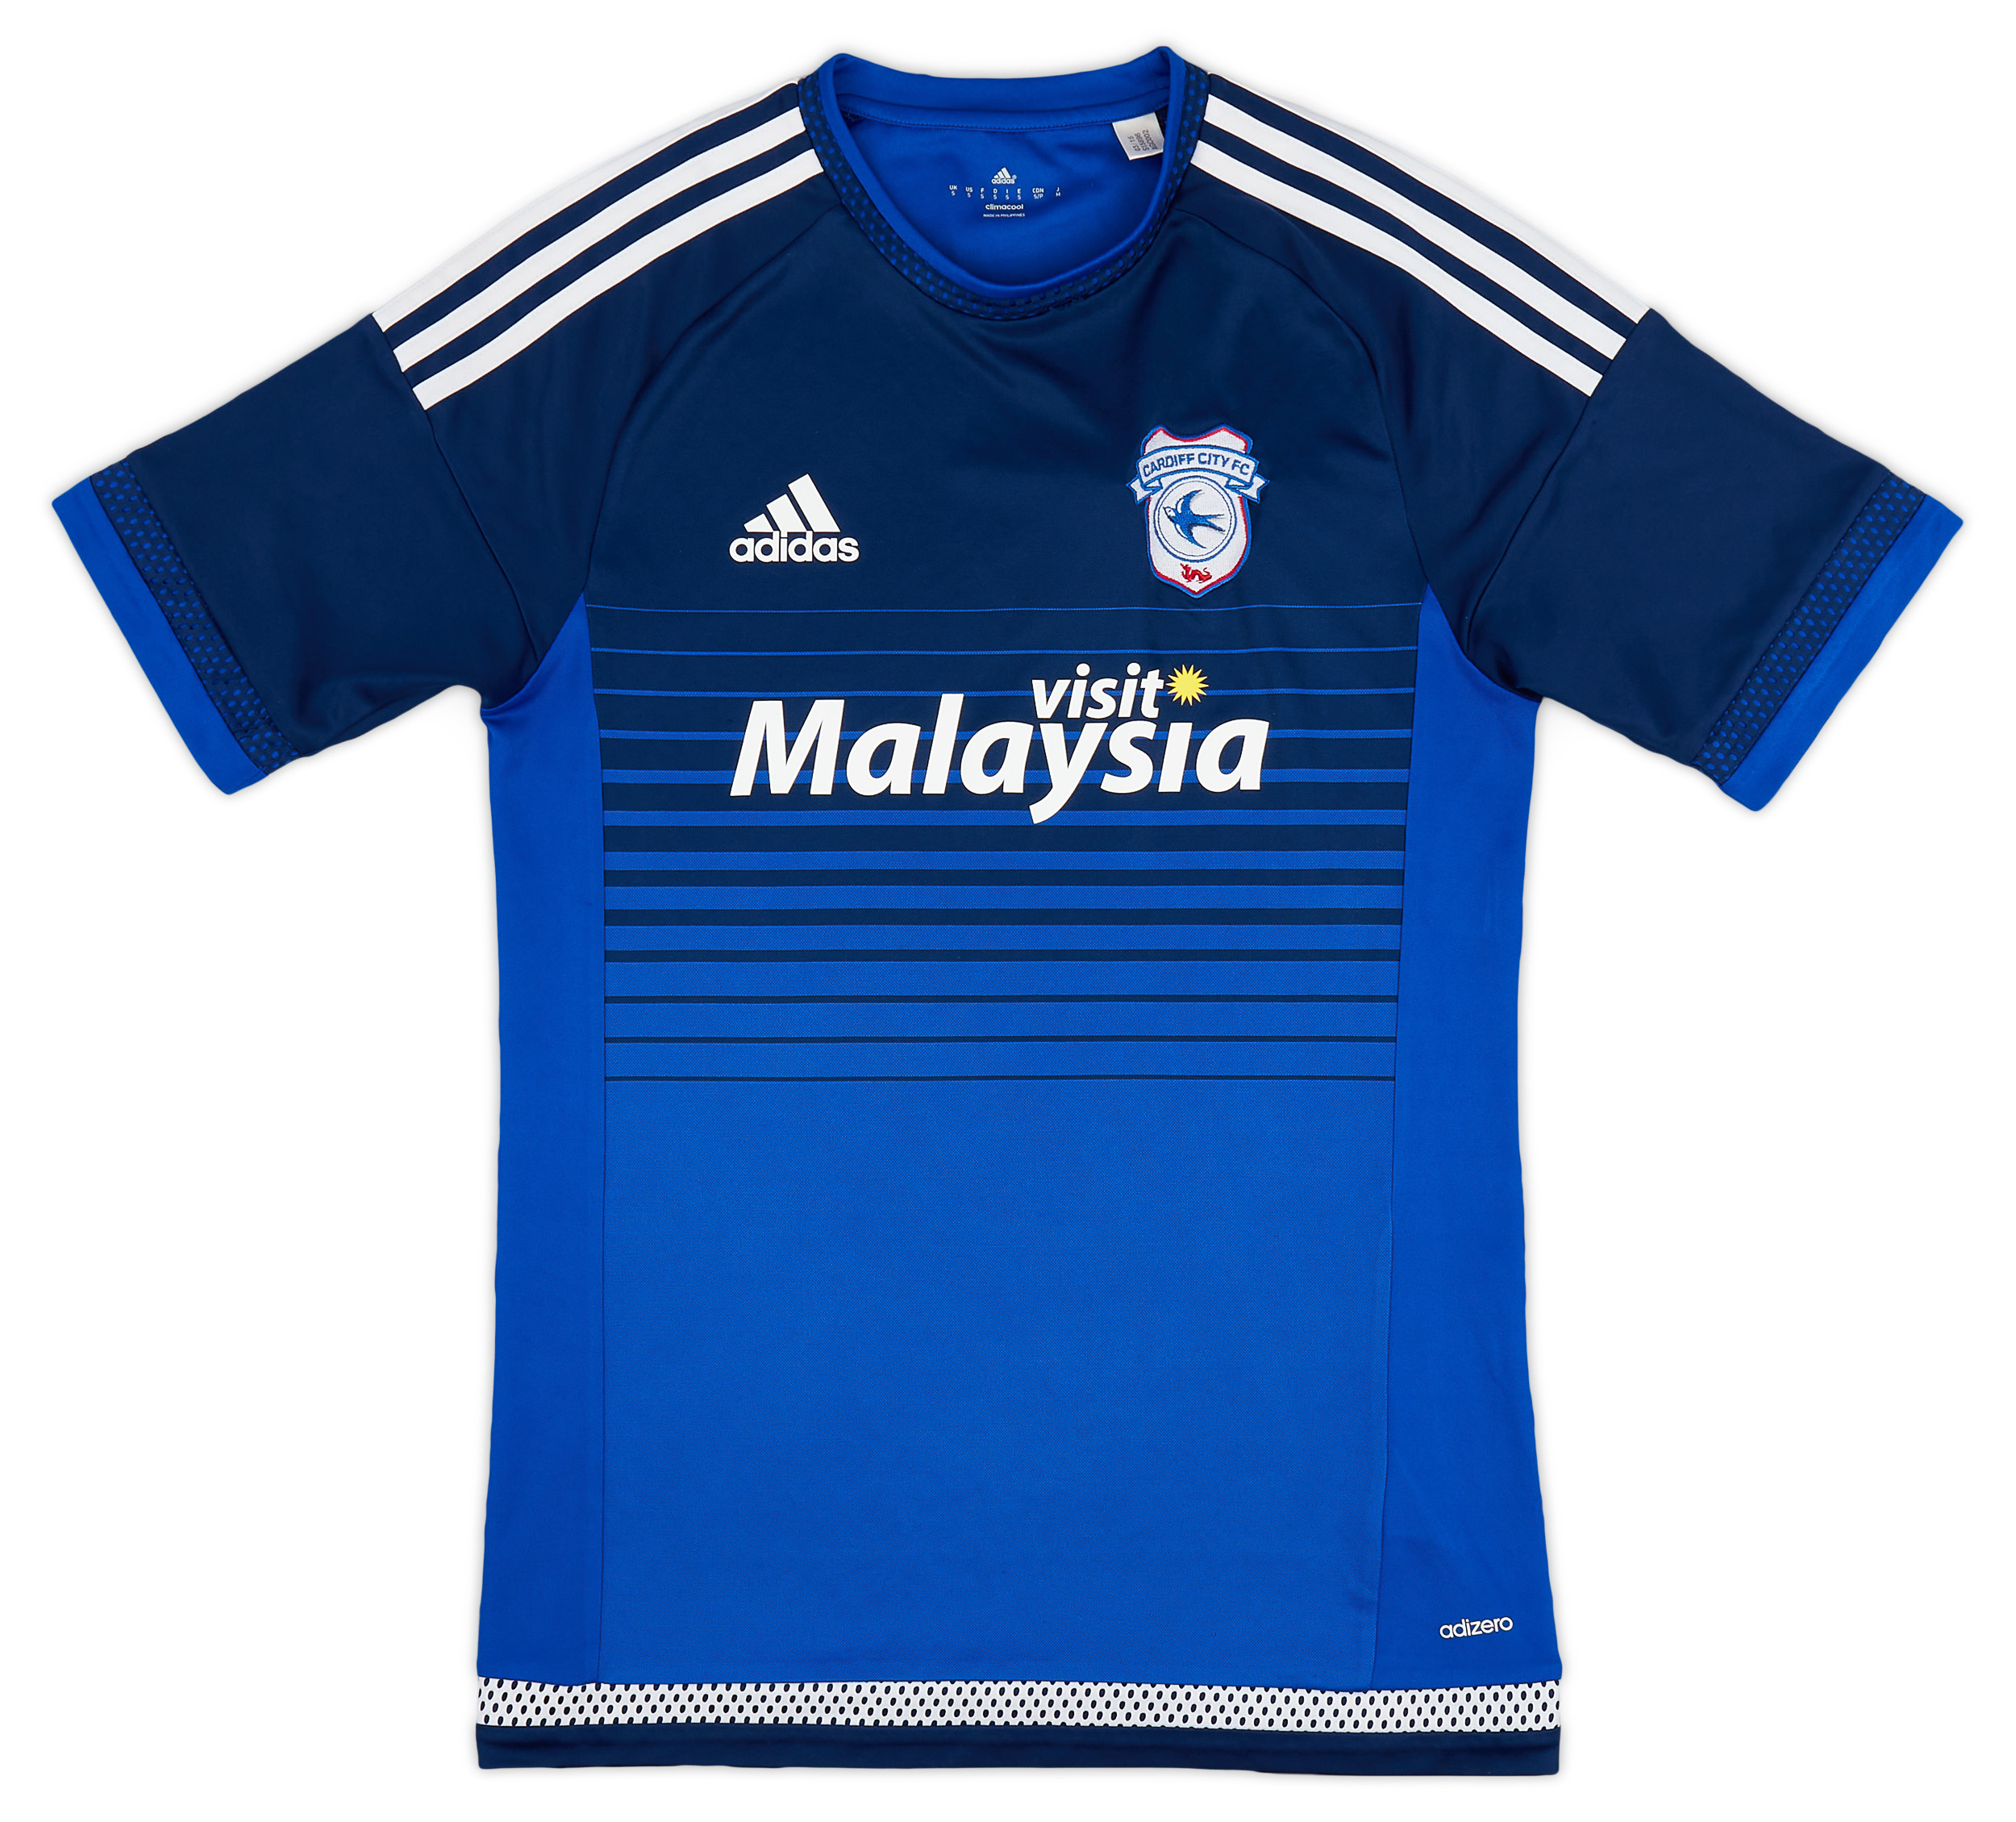 2015-16 Cardiff City Home Shirt - 8/10 - ()